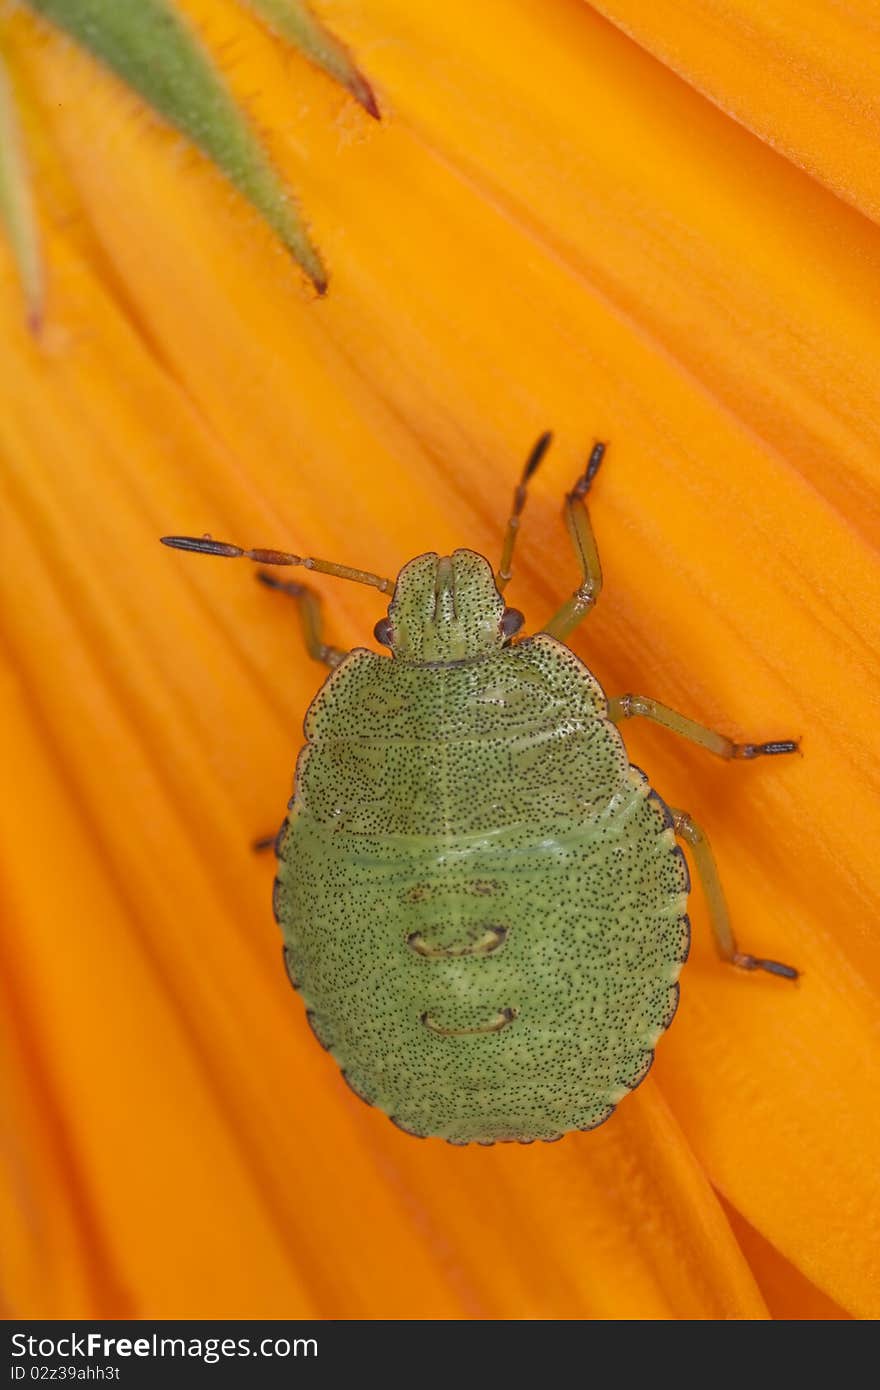 Green shield bug nymph (Palomena prasina) sitting on pot marigold. Extreme close-up with high magnification.